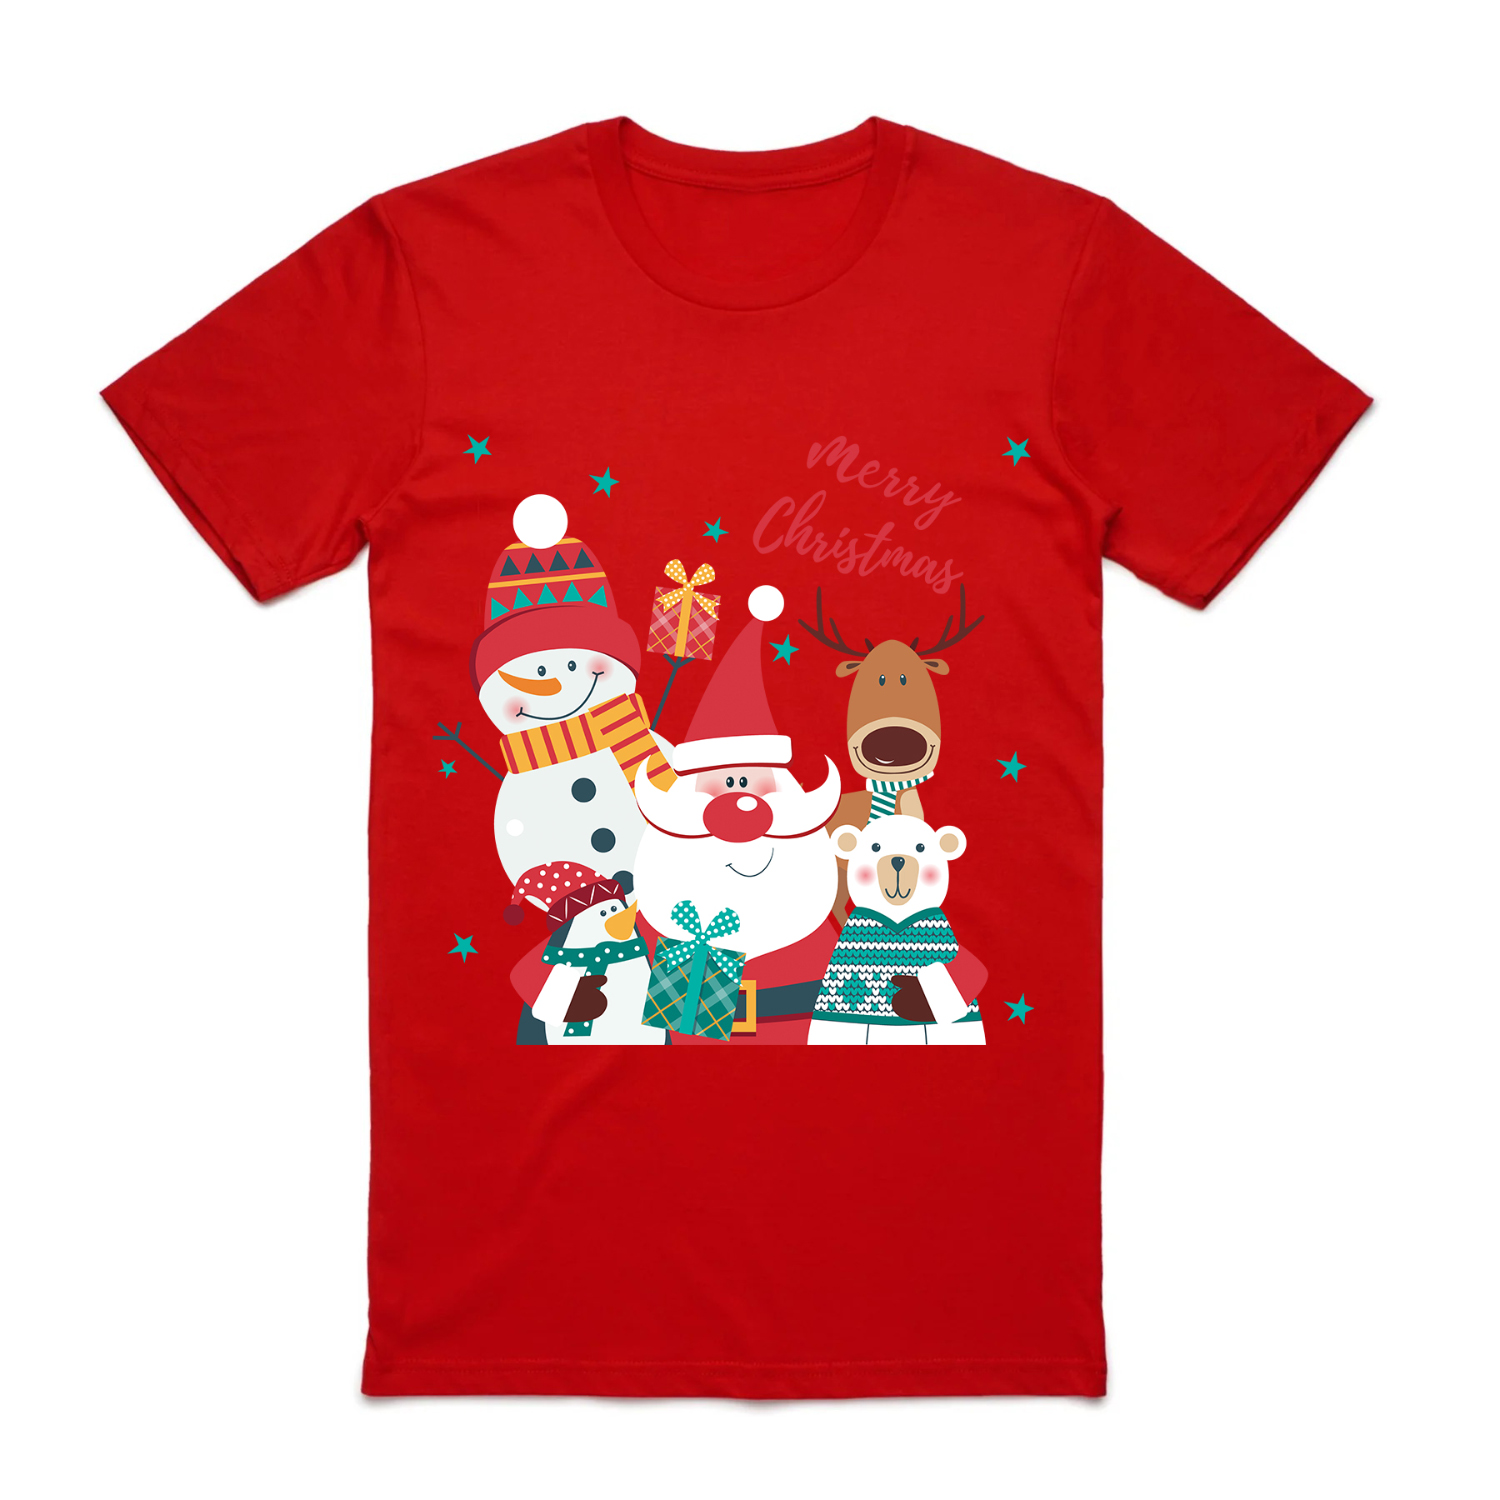 100% Cotton Christmas T-shirt Adult Unisex Tee Tops - Santa Gathering